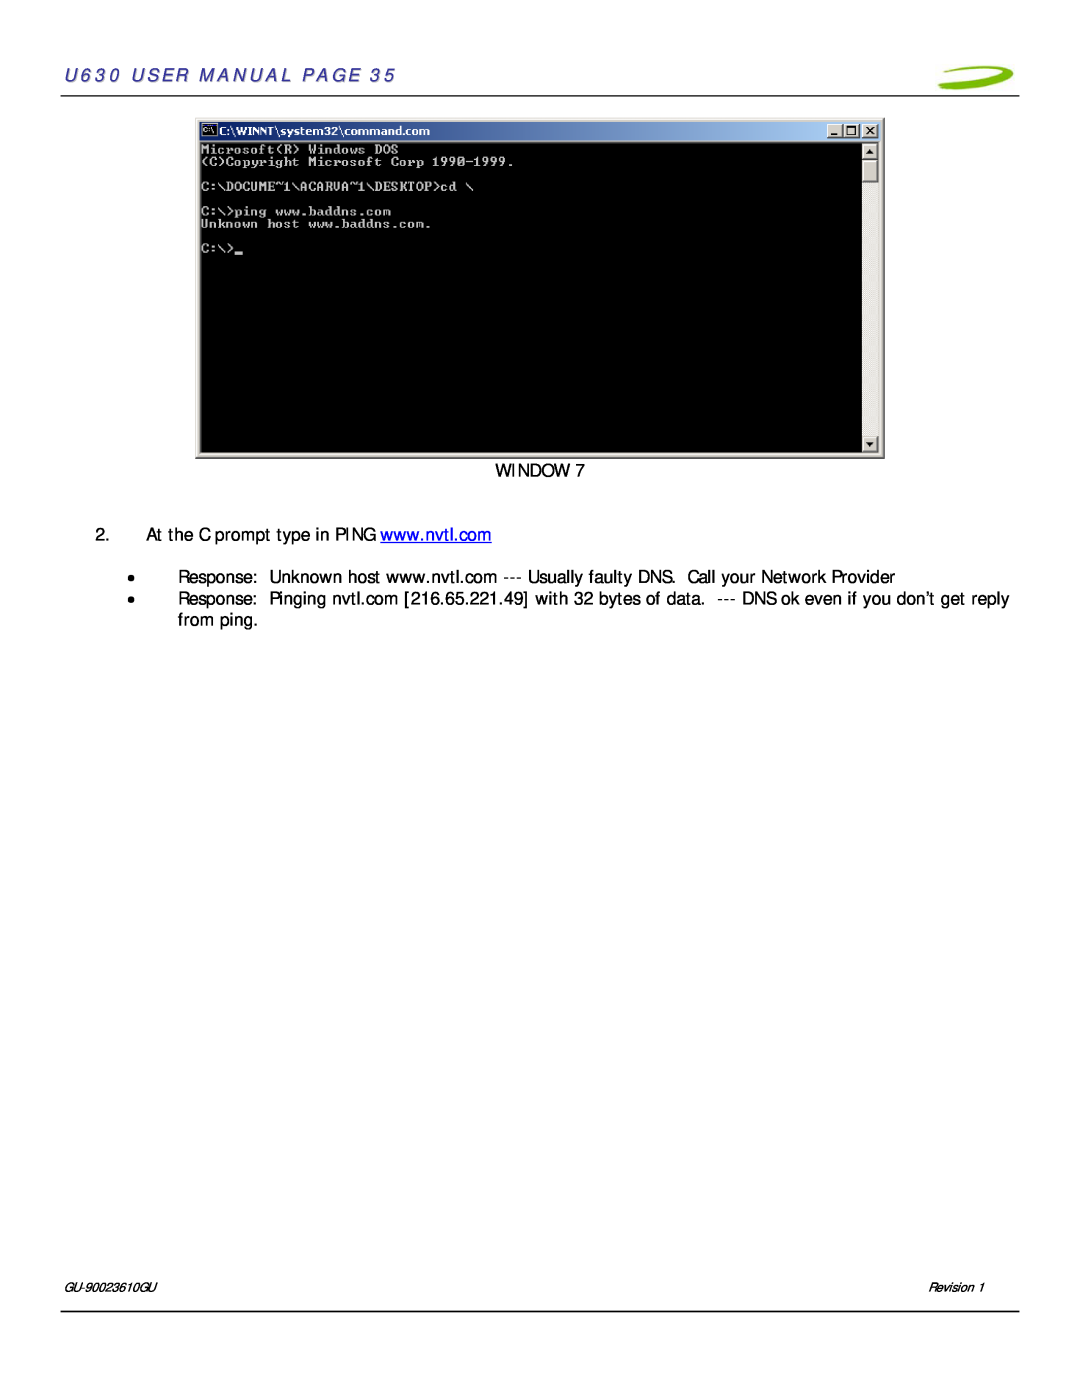 InFocus user manual U630 USER MANUAL PAGE, Window, GU-90023610GU, Revision 